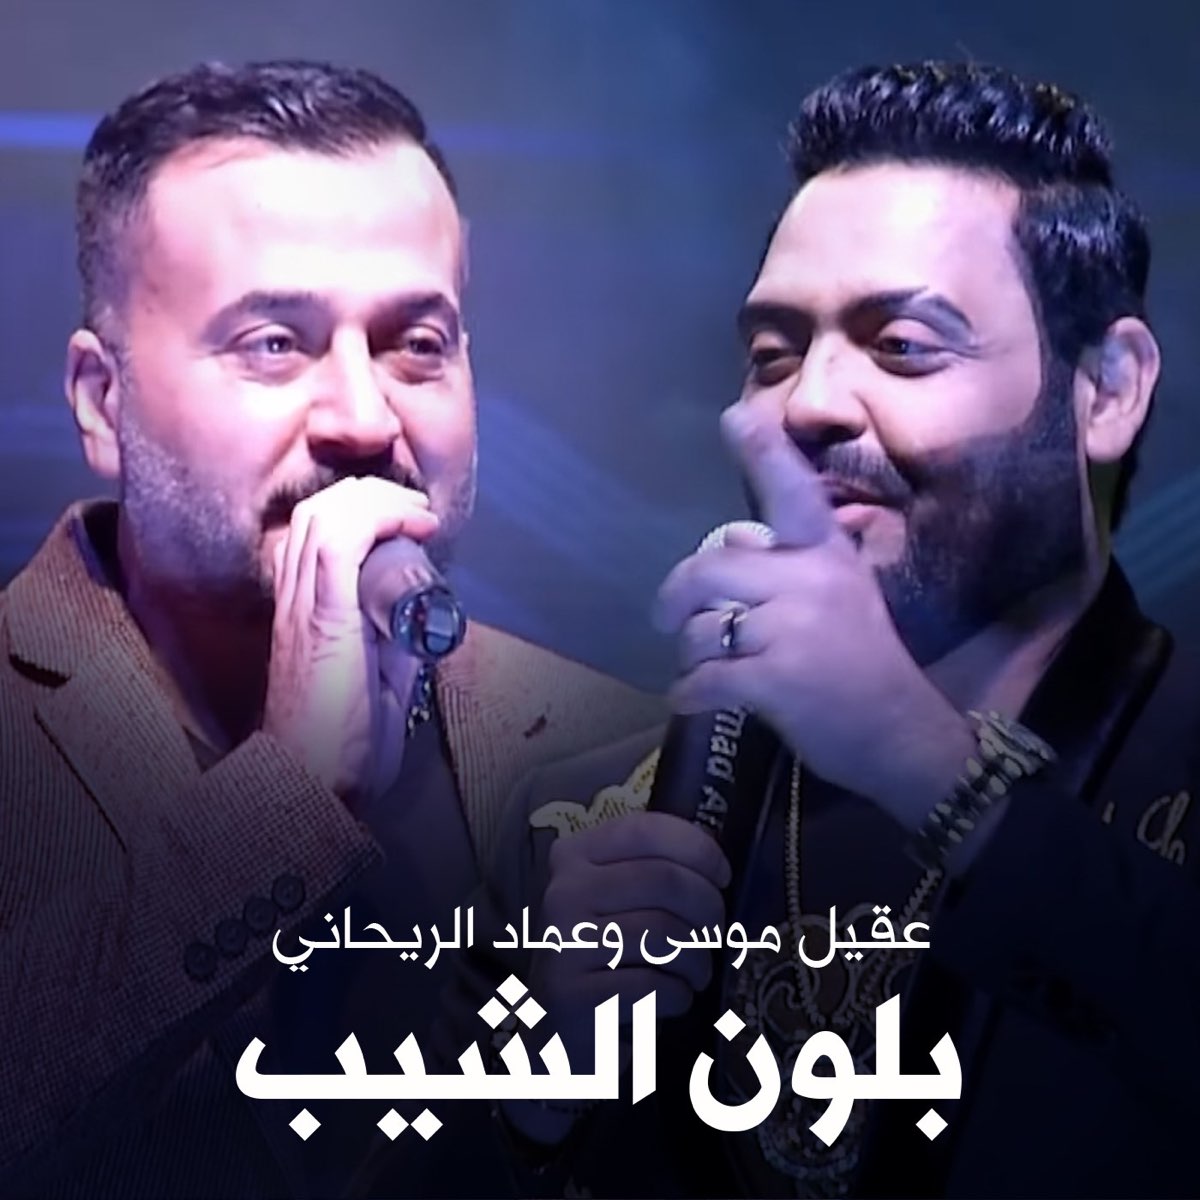 بلون الشيب (feat. عماد الريحاني) - Single” álbum de عقيل موسى en Apple Music